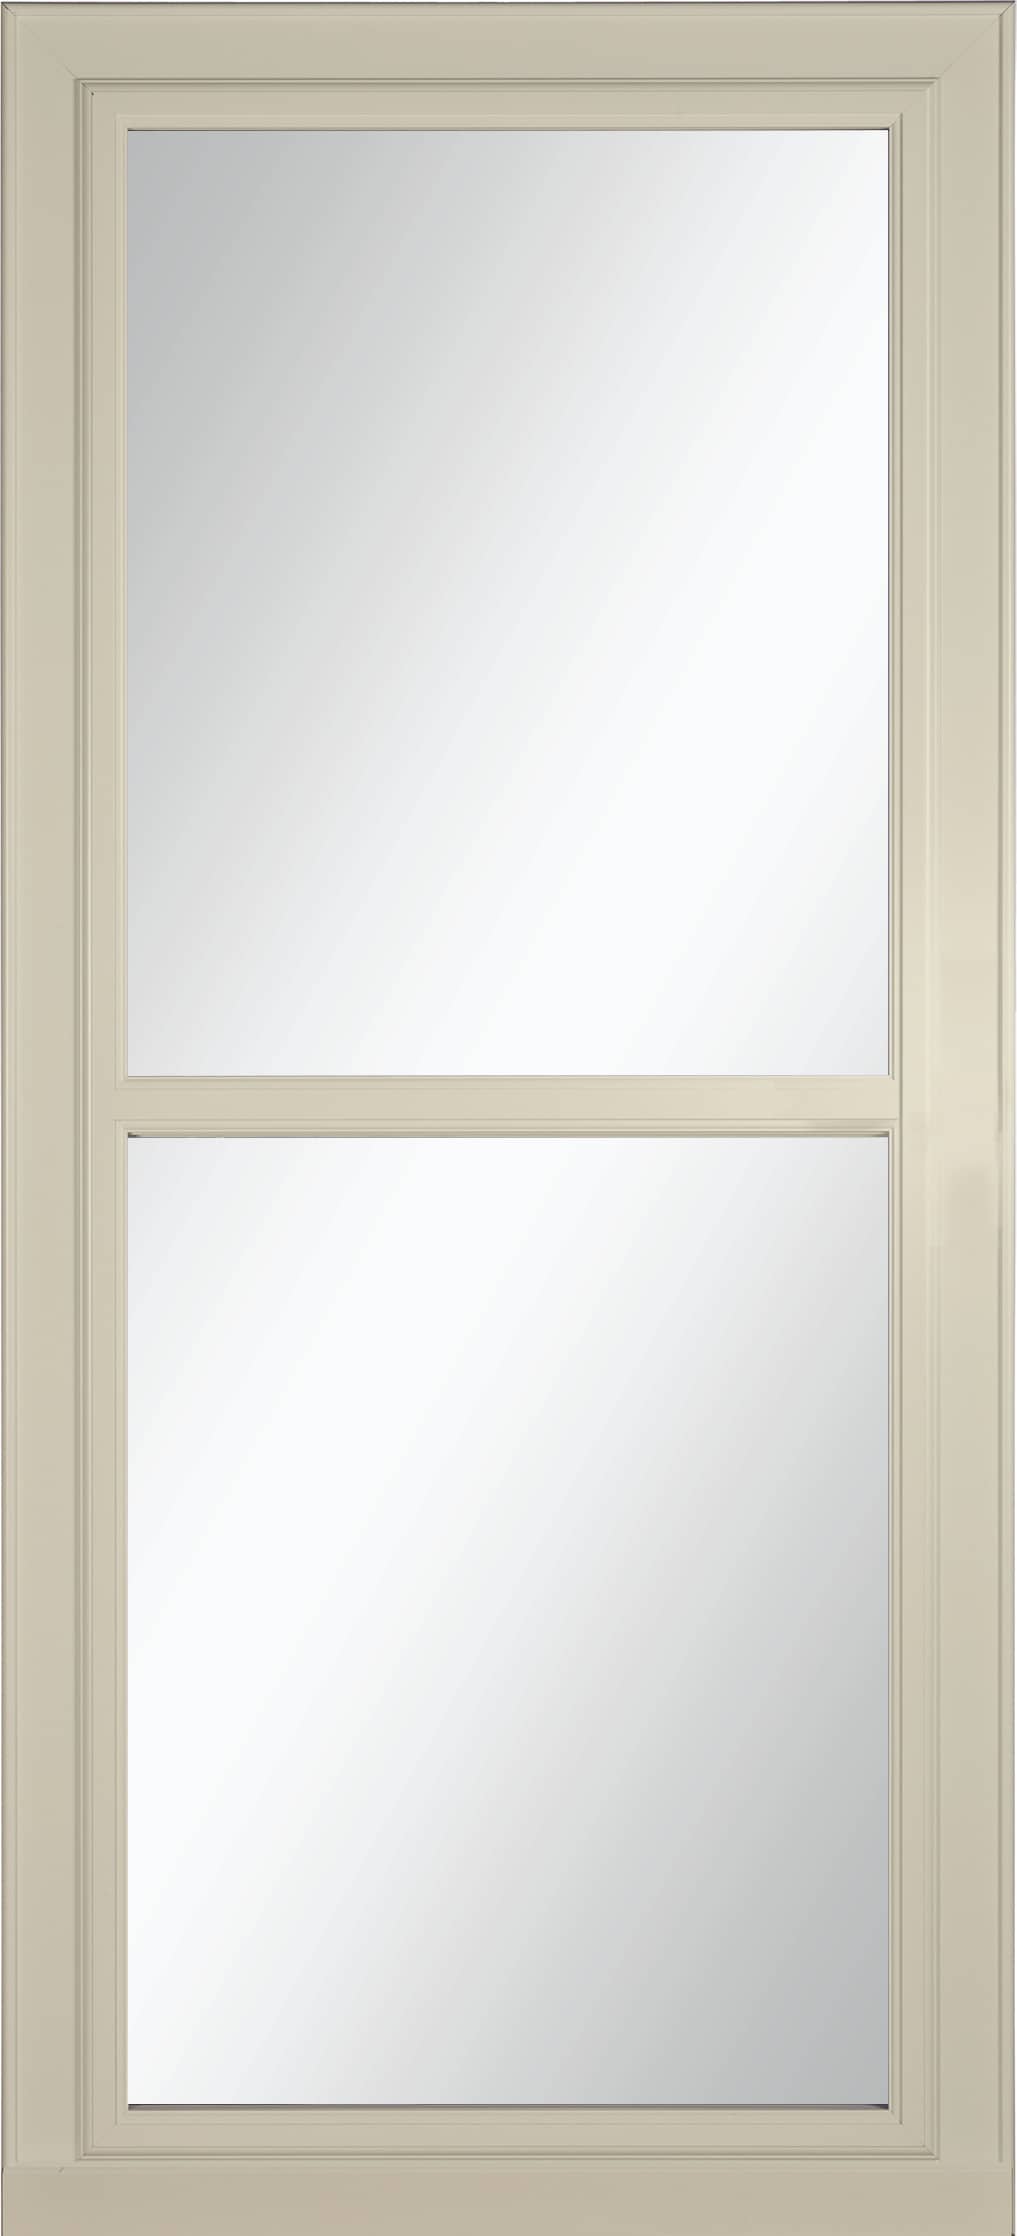 Tradewinds Selection 36-in x 96-in Almond Full-view Retractable Screen Aluminum Storm Door in Off-White | - LARSON 14604089